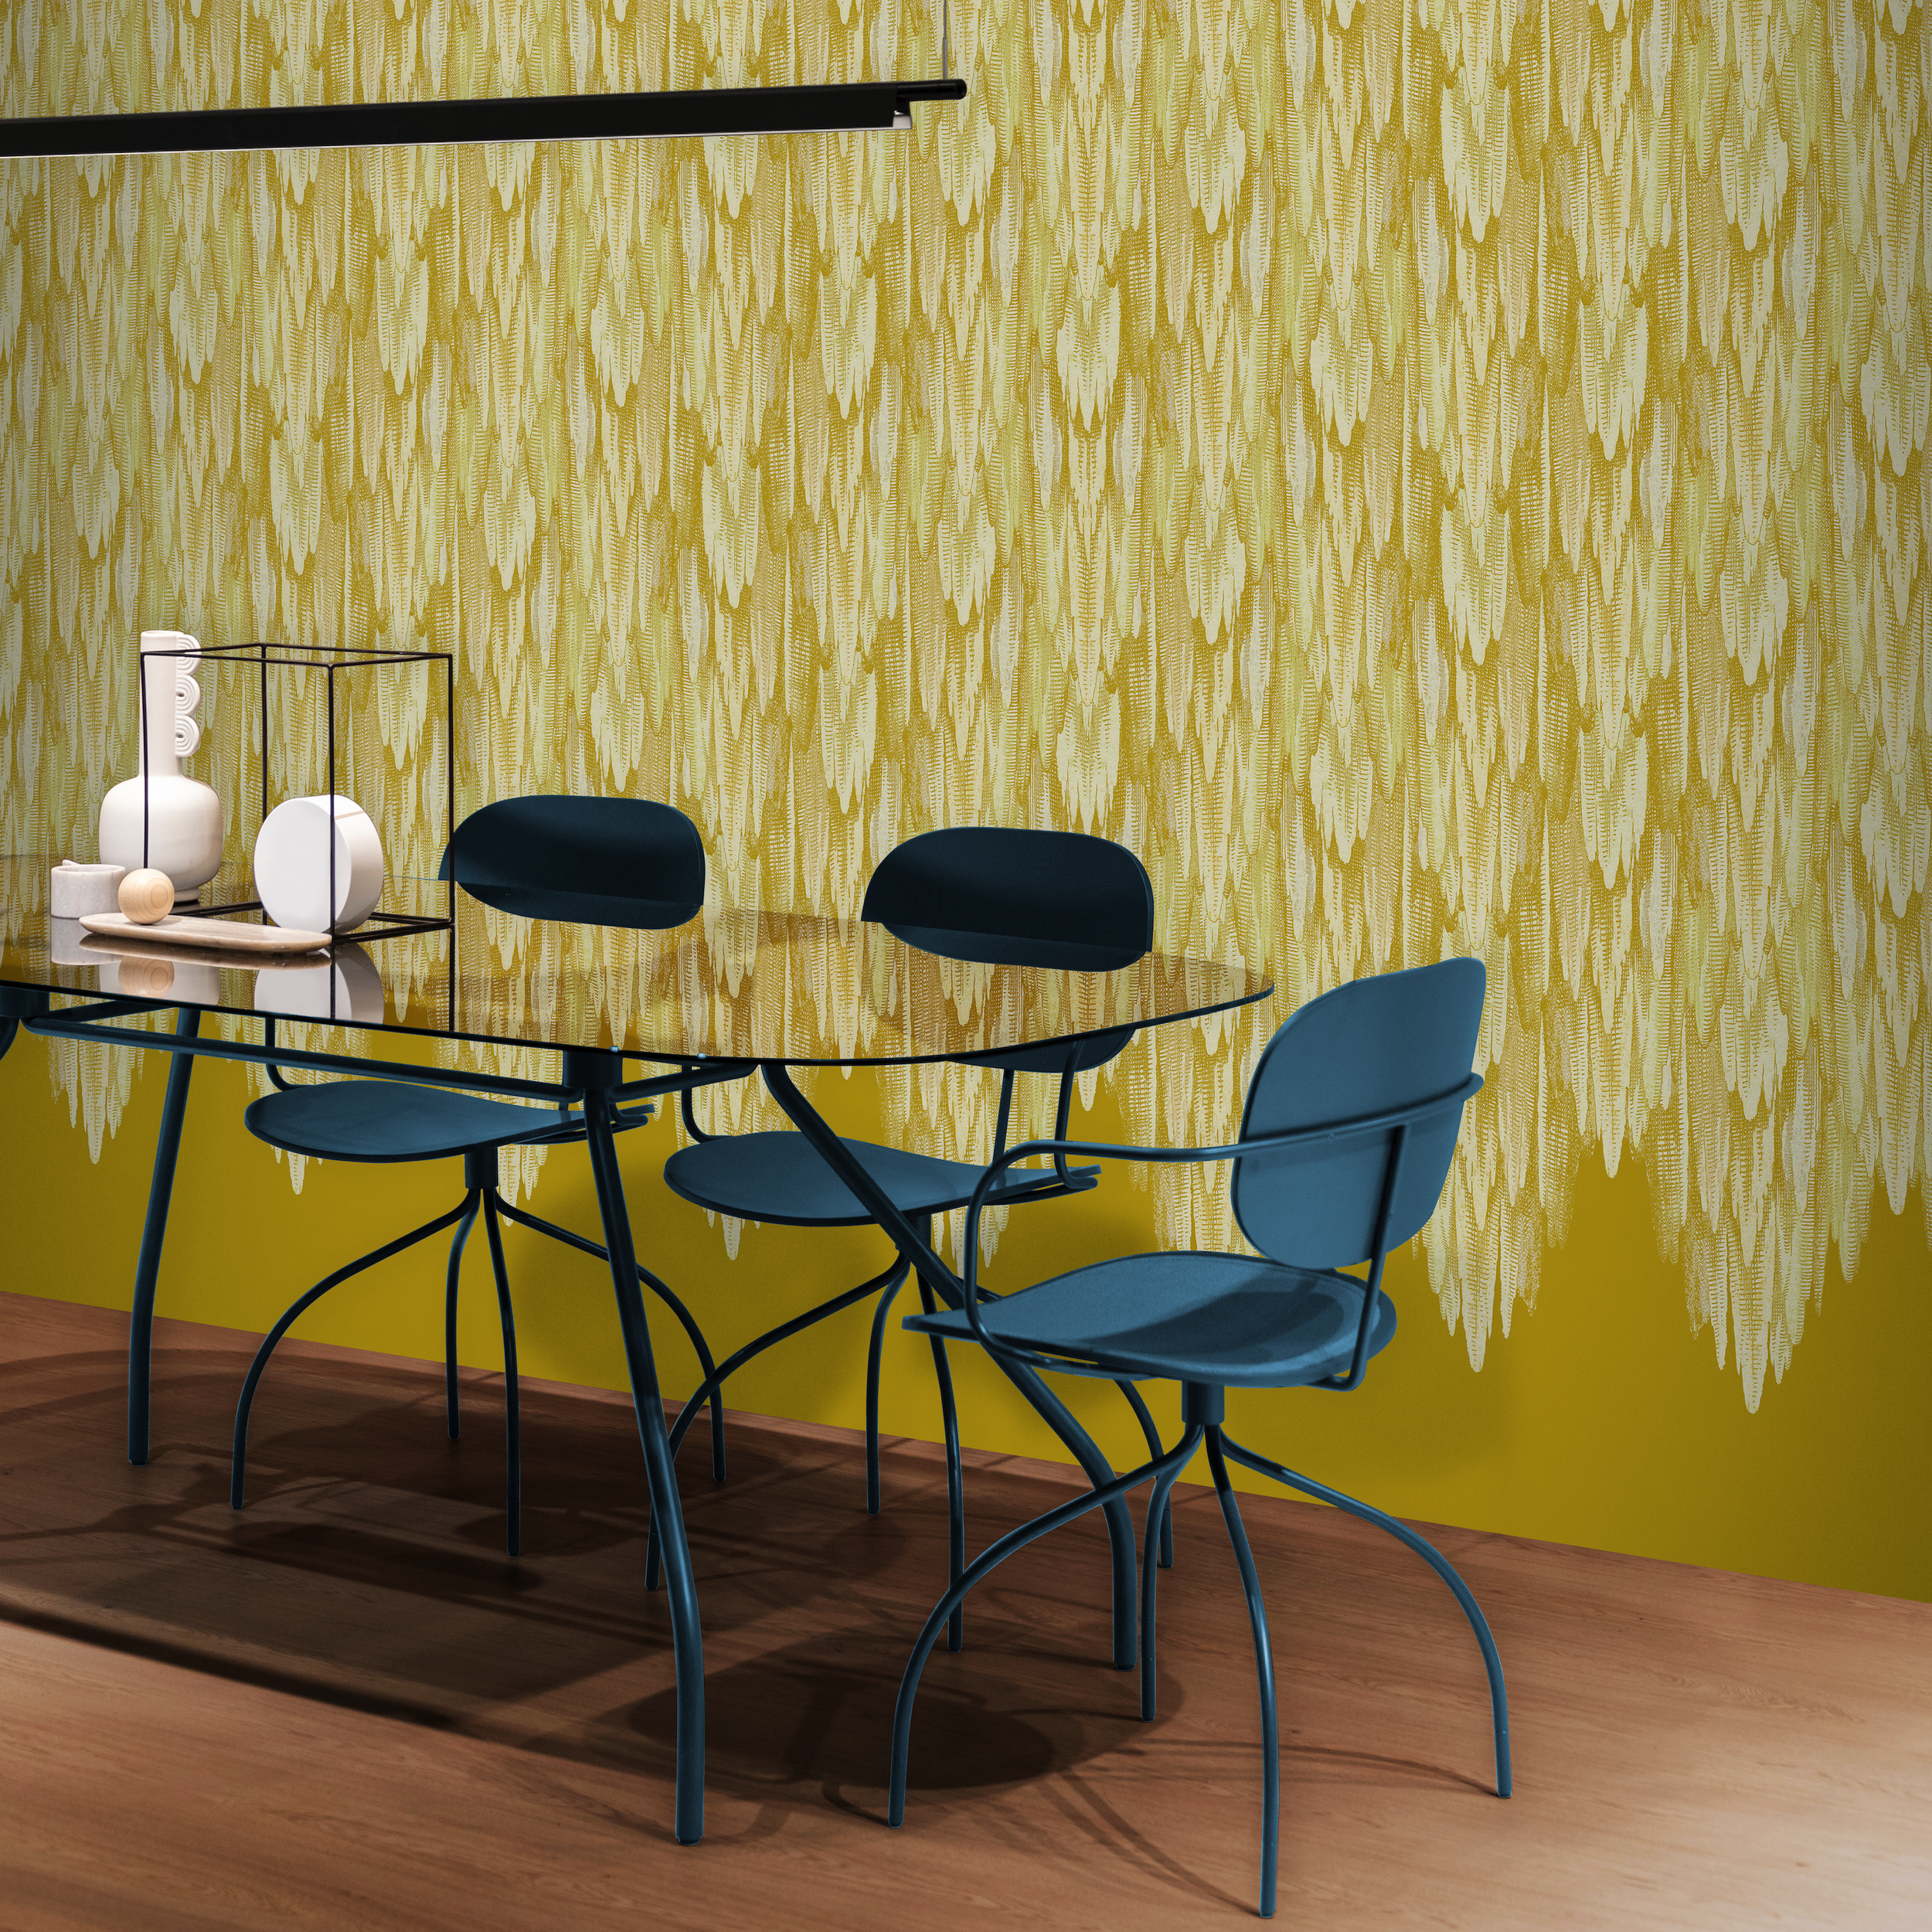 Grotto - Turmeric Mica, Antique Style Wallpaper, Contemporary Dining Table, Studio DeSimoneWayland